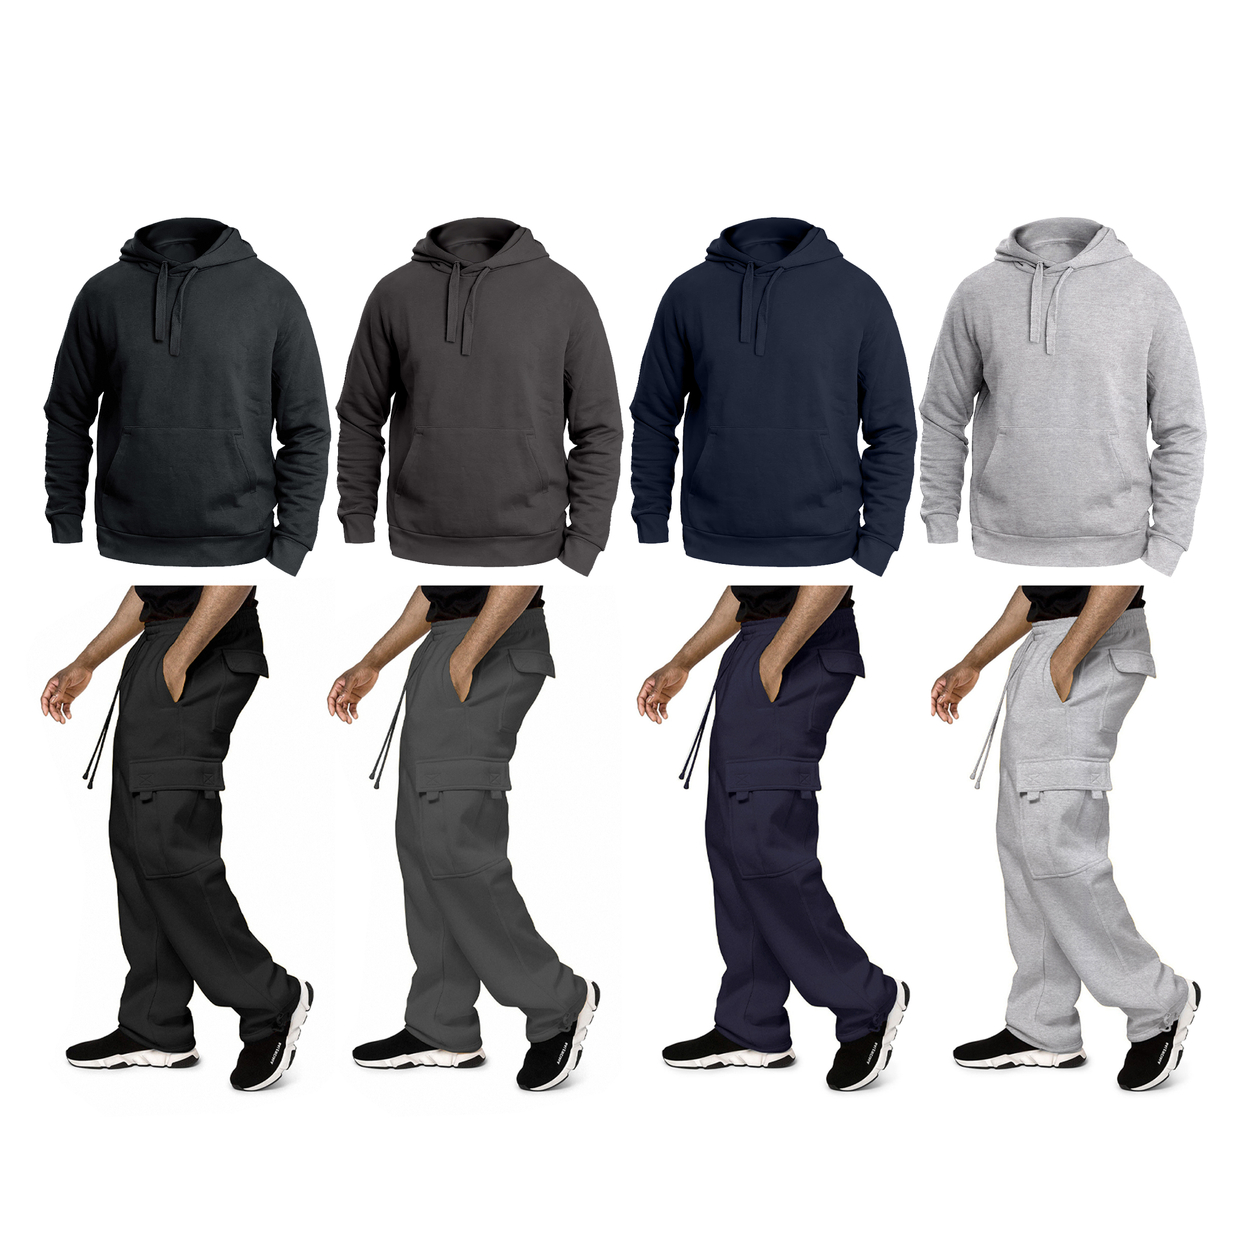 2-Pack: Men's Big & Tall Winter Warm Cozy Athletic Fleece Lined Multi-Pocket Cargo Sweatsuit - Black, 3xl